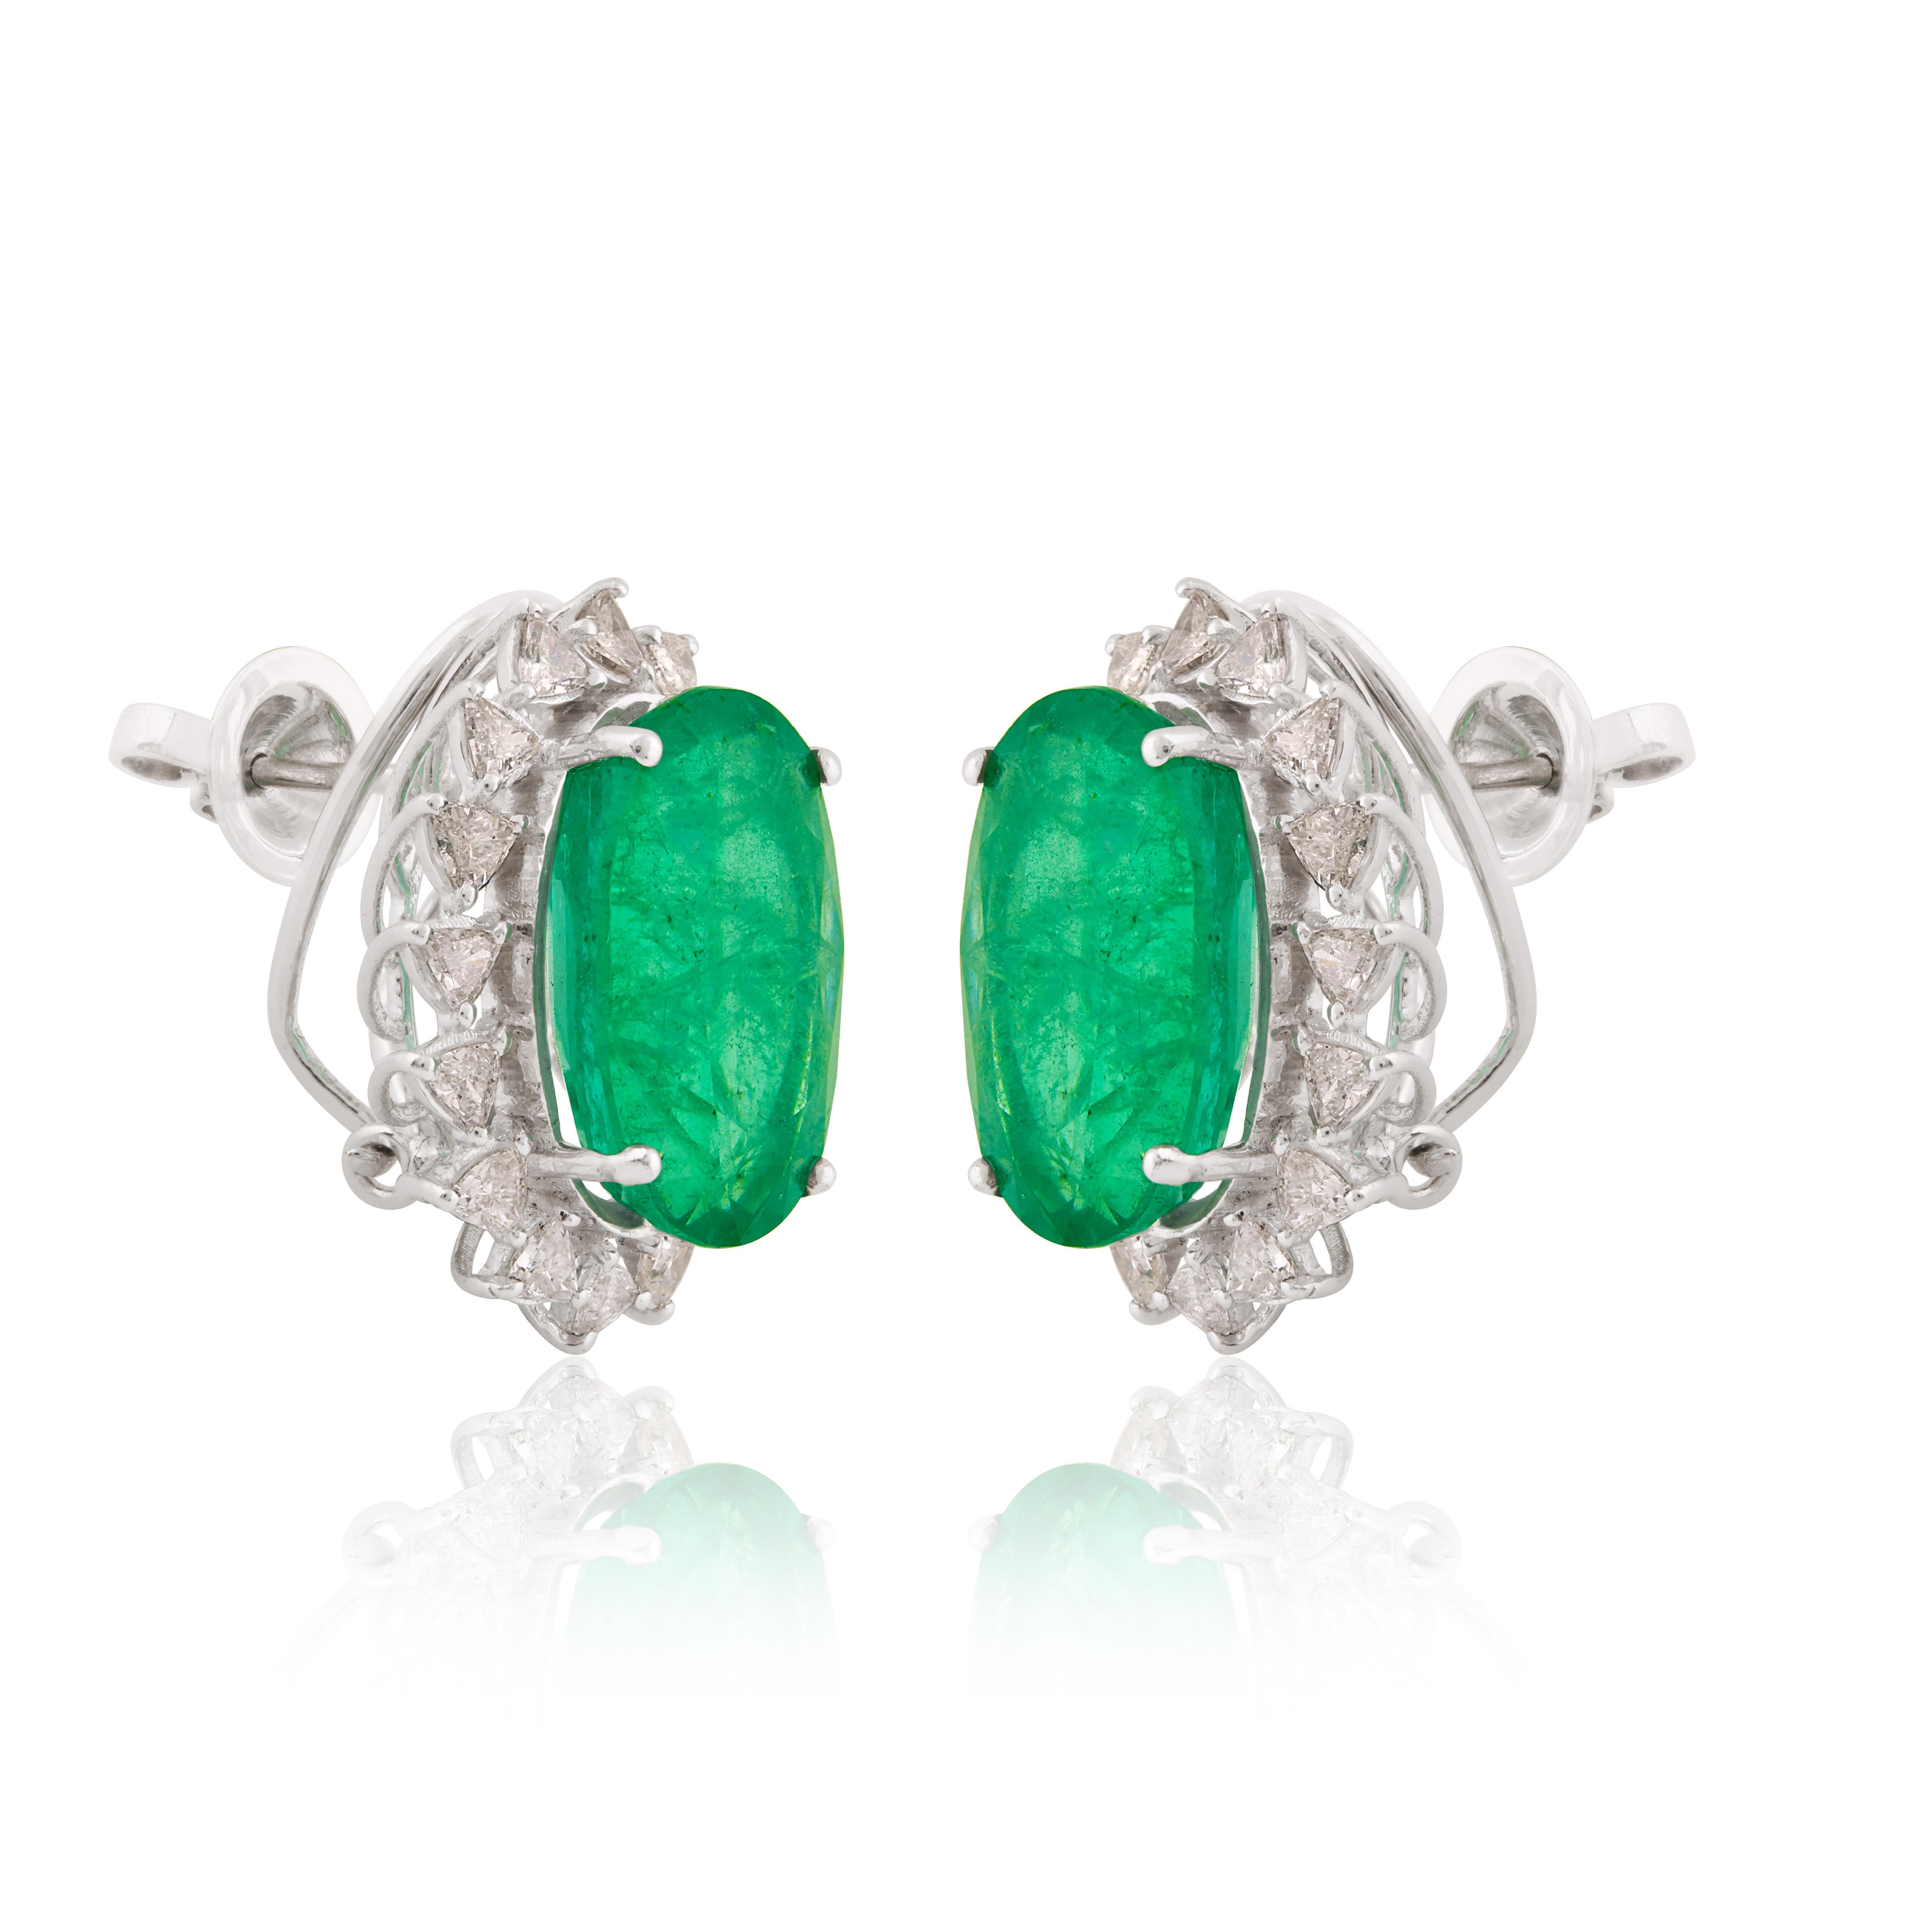 Oval Cut Real Zambian Emerald Gemstone Trillion Diamond Earrings 14k White Gold Jewelry For Sale